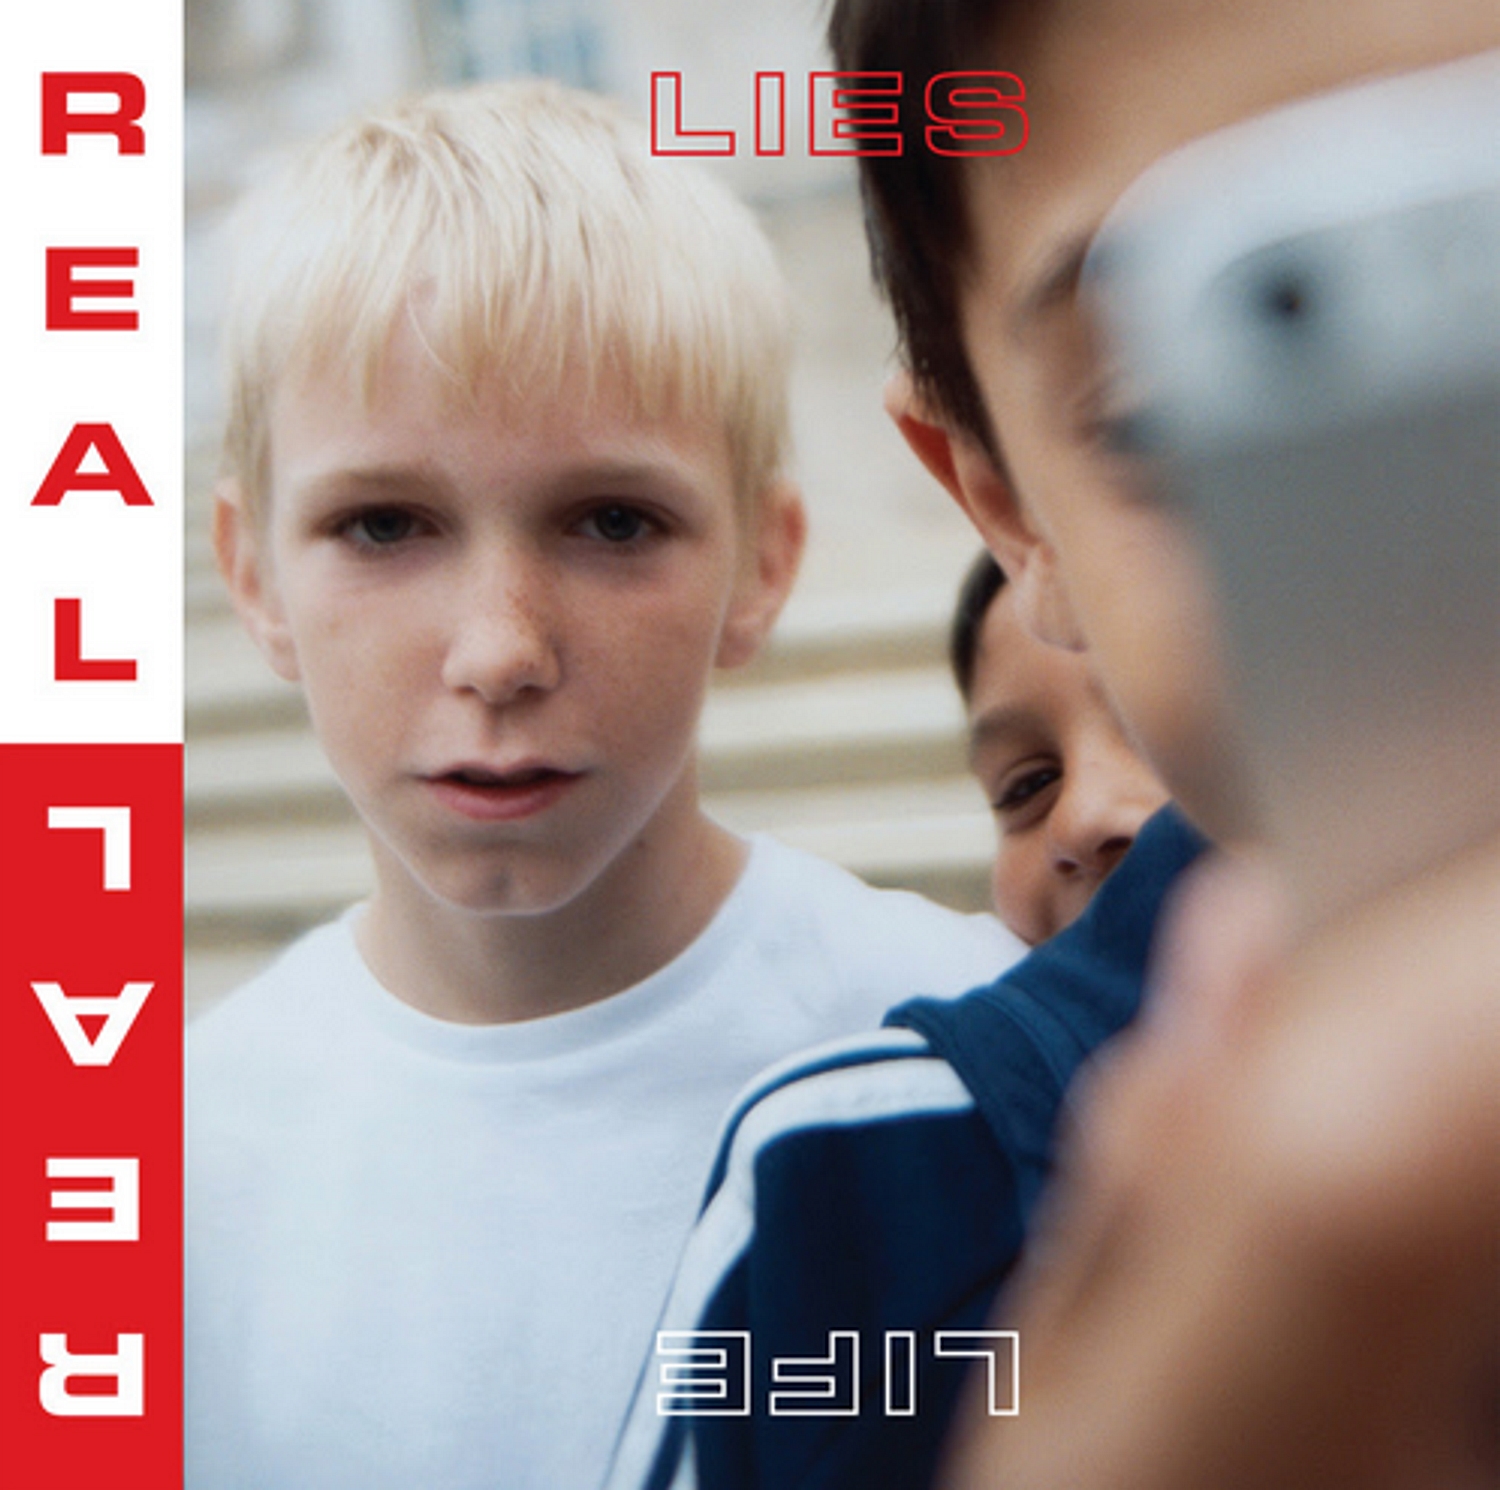 Real Lies announce debut album ‘Real Life’, UK tour dates